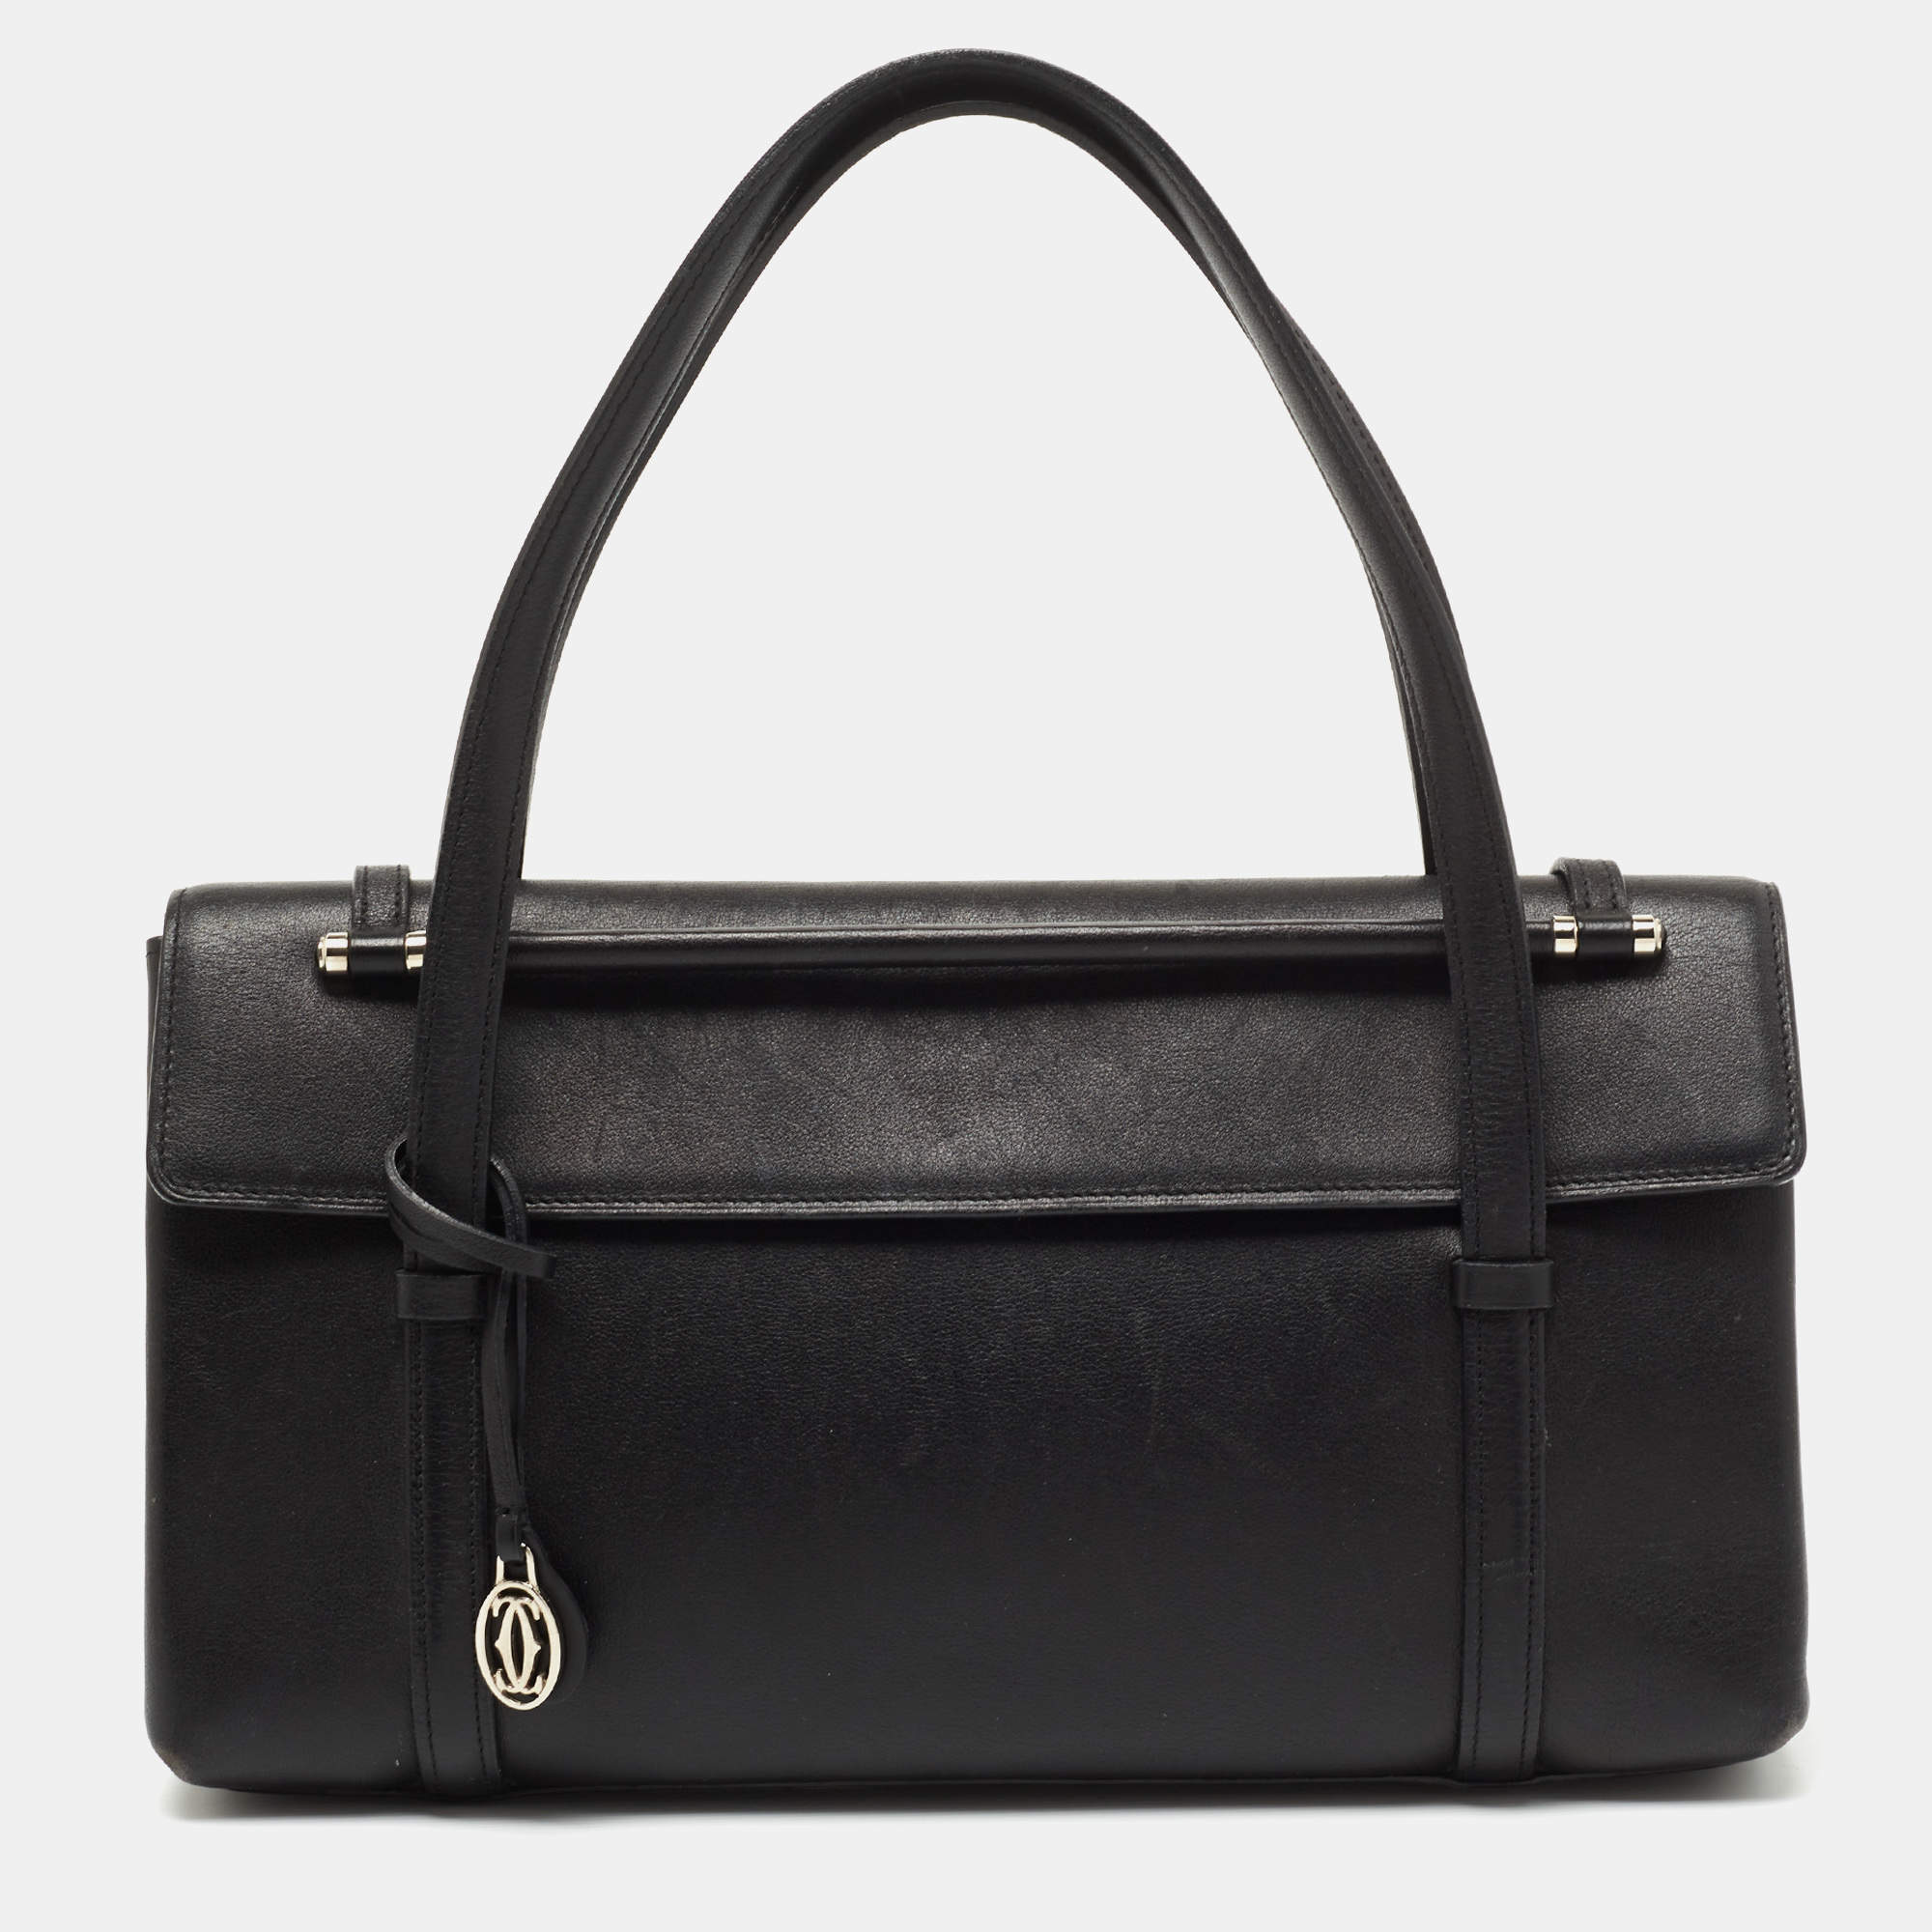 Cartier Black Leather Cabochon Flap Shoulder Bag